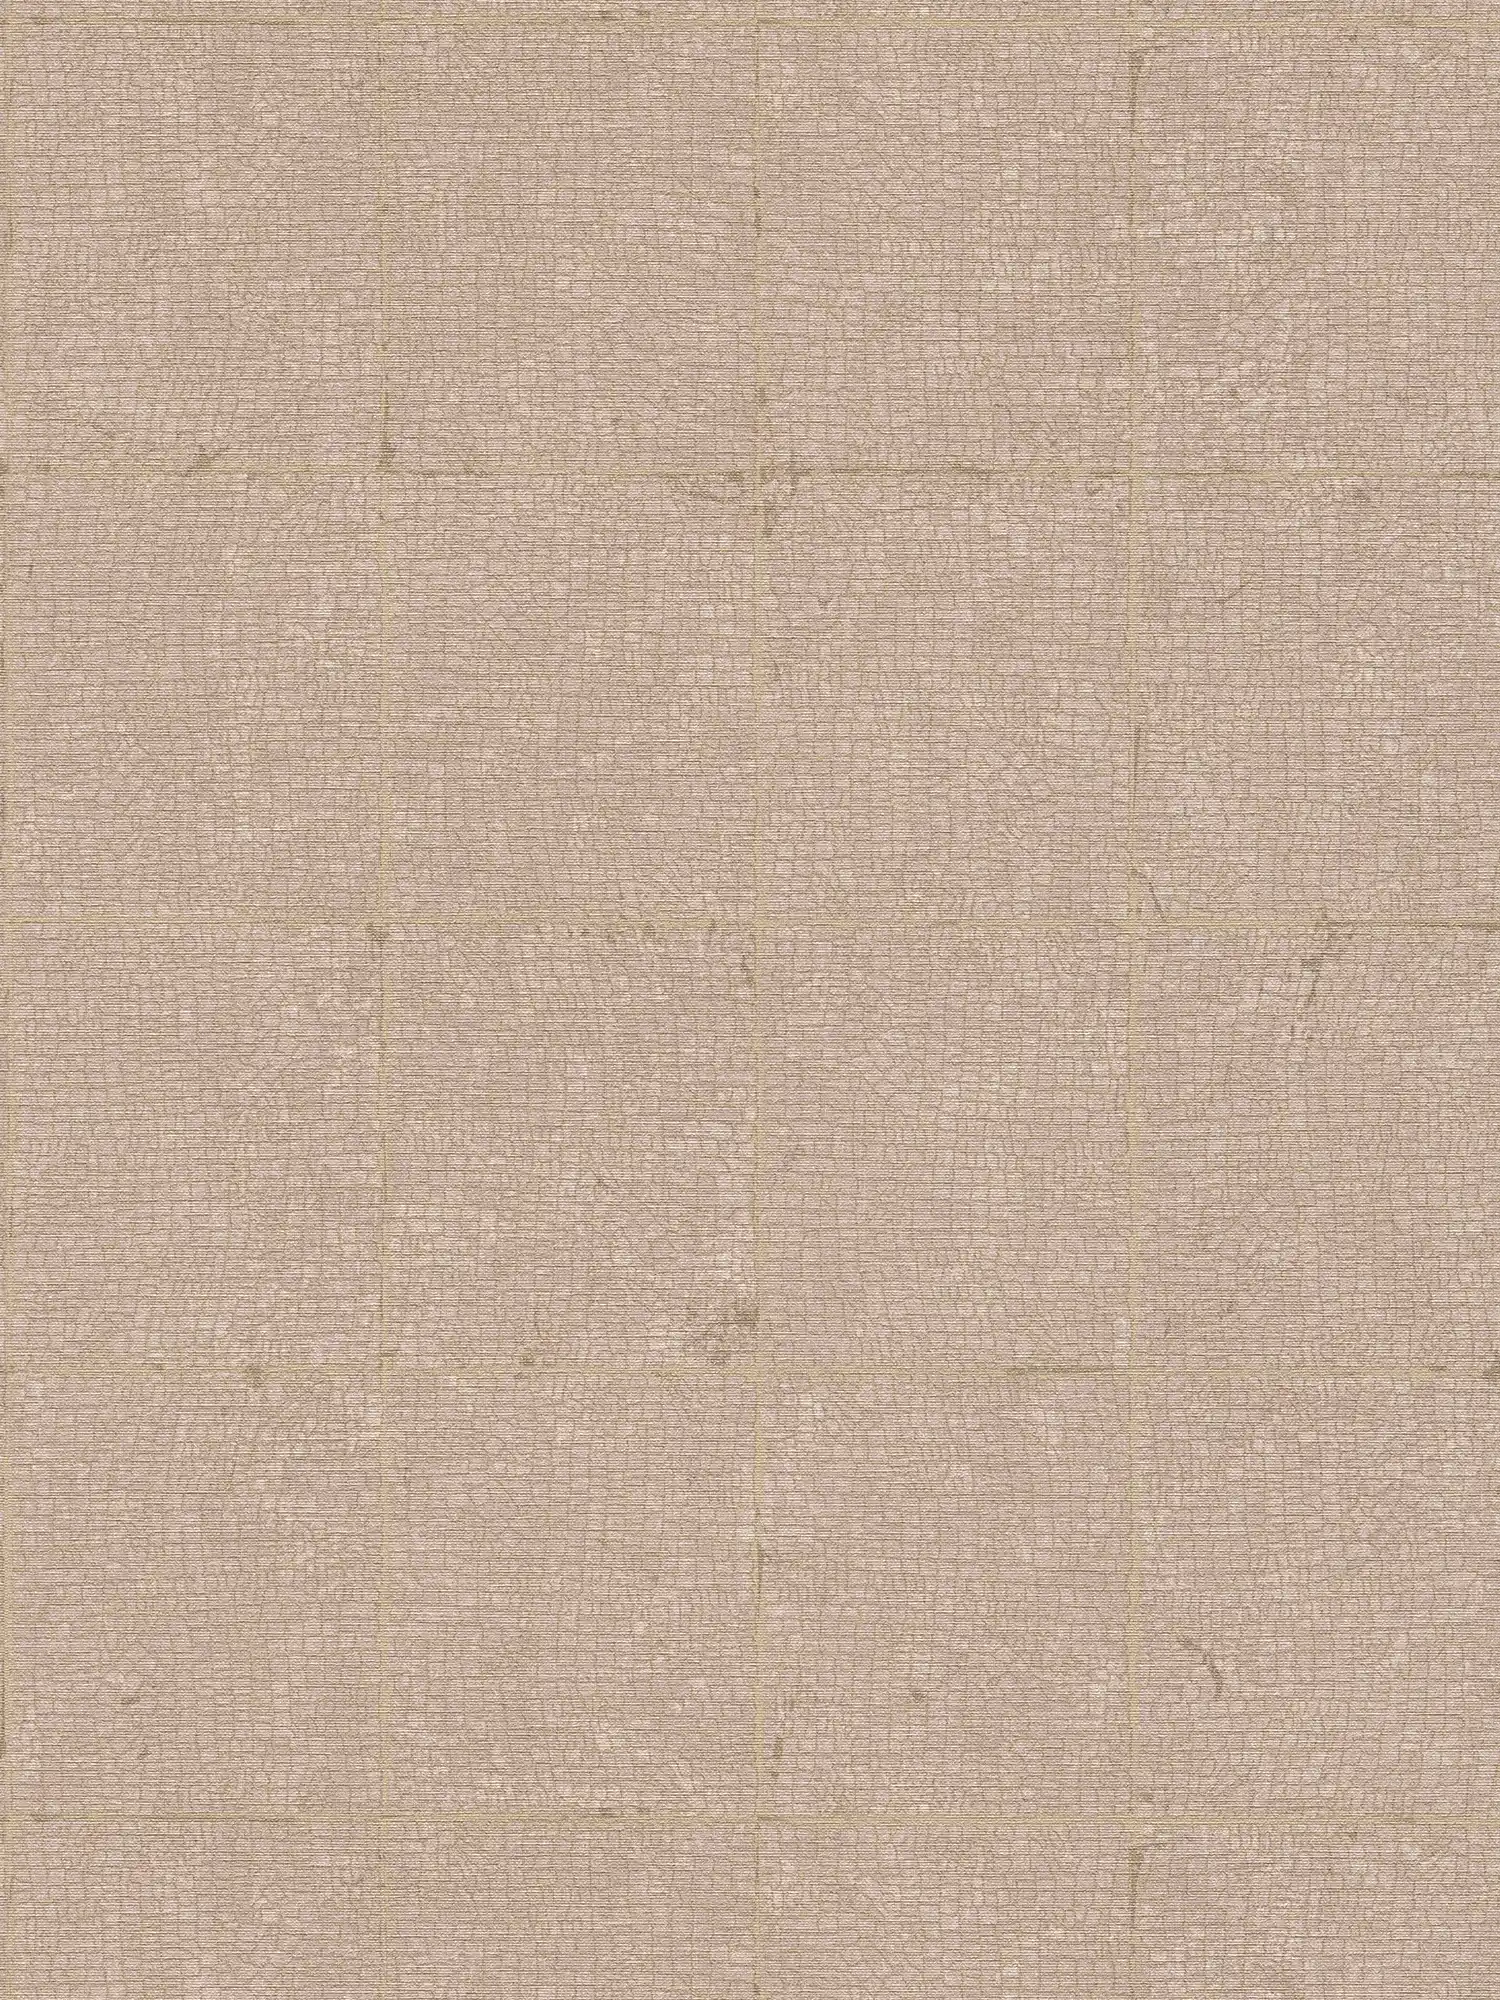 Tile optics wallpaper used look & crackle effect - brown
